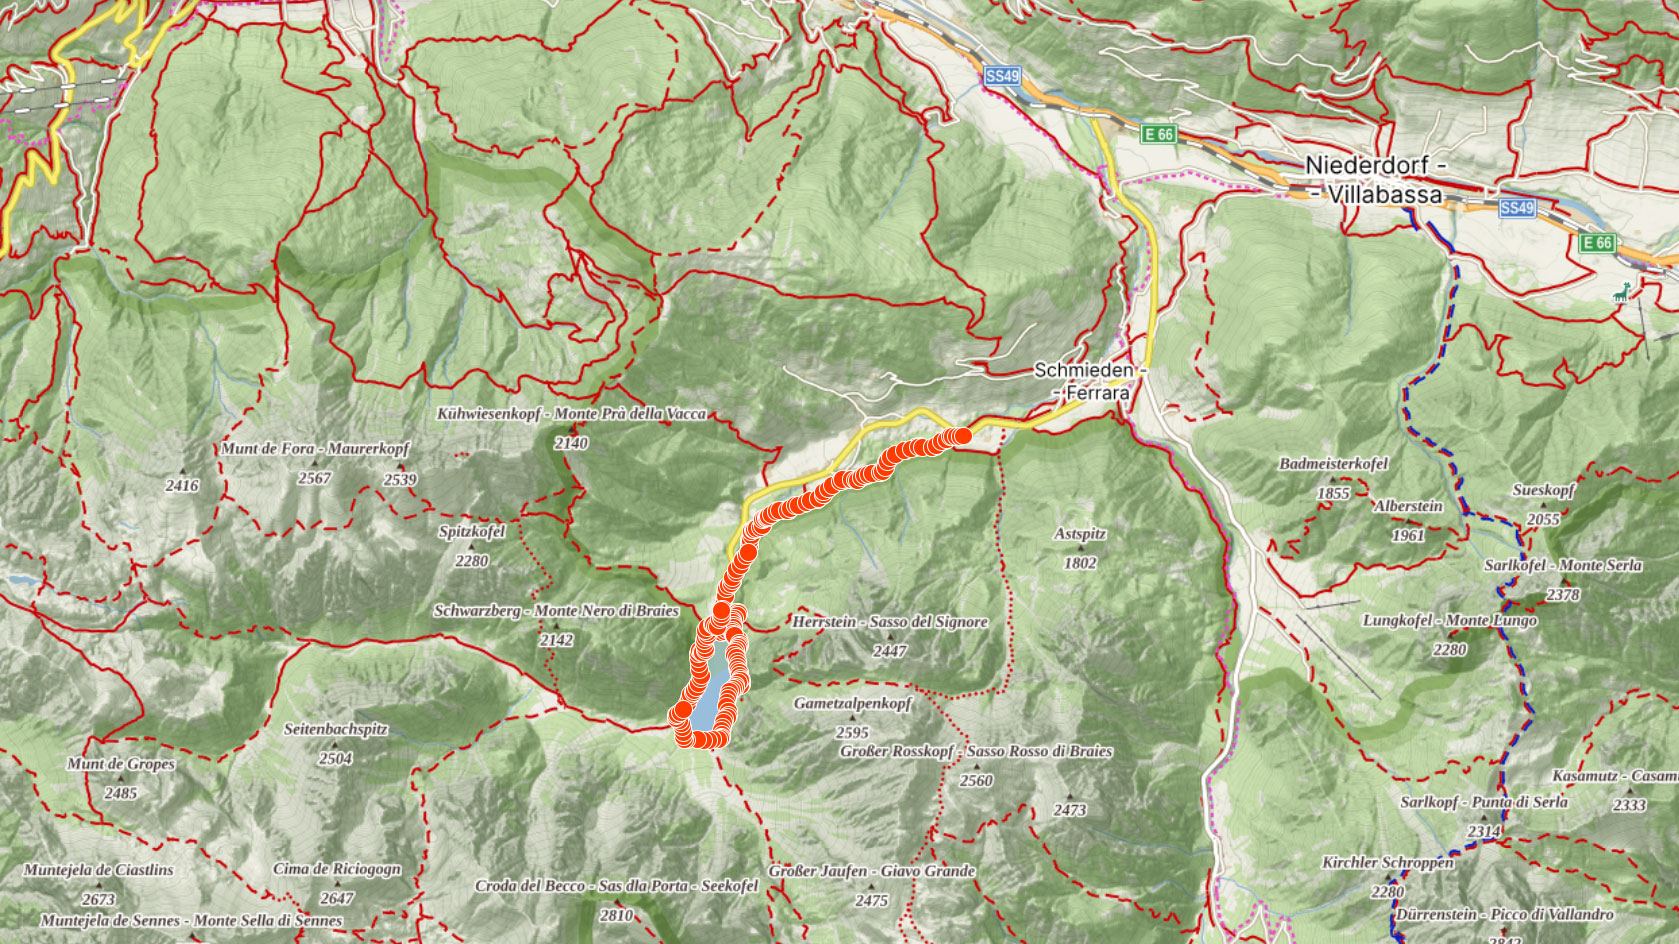 Mapa výletu kolem Lago di Braies v Itálii